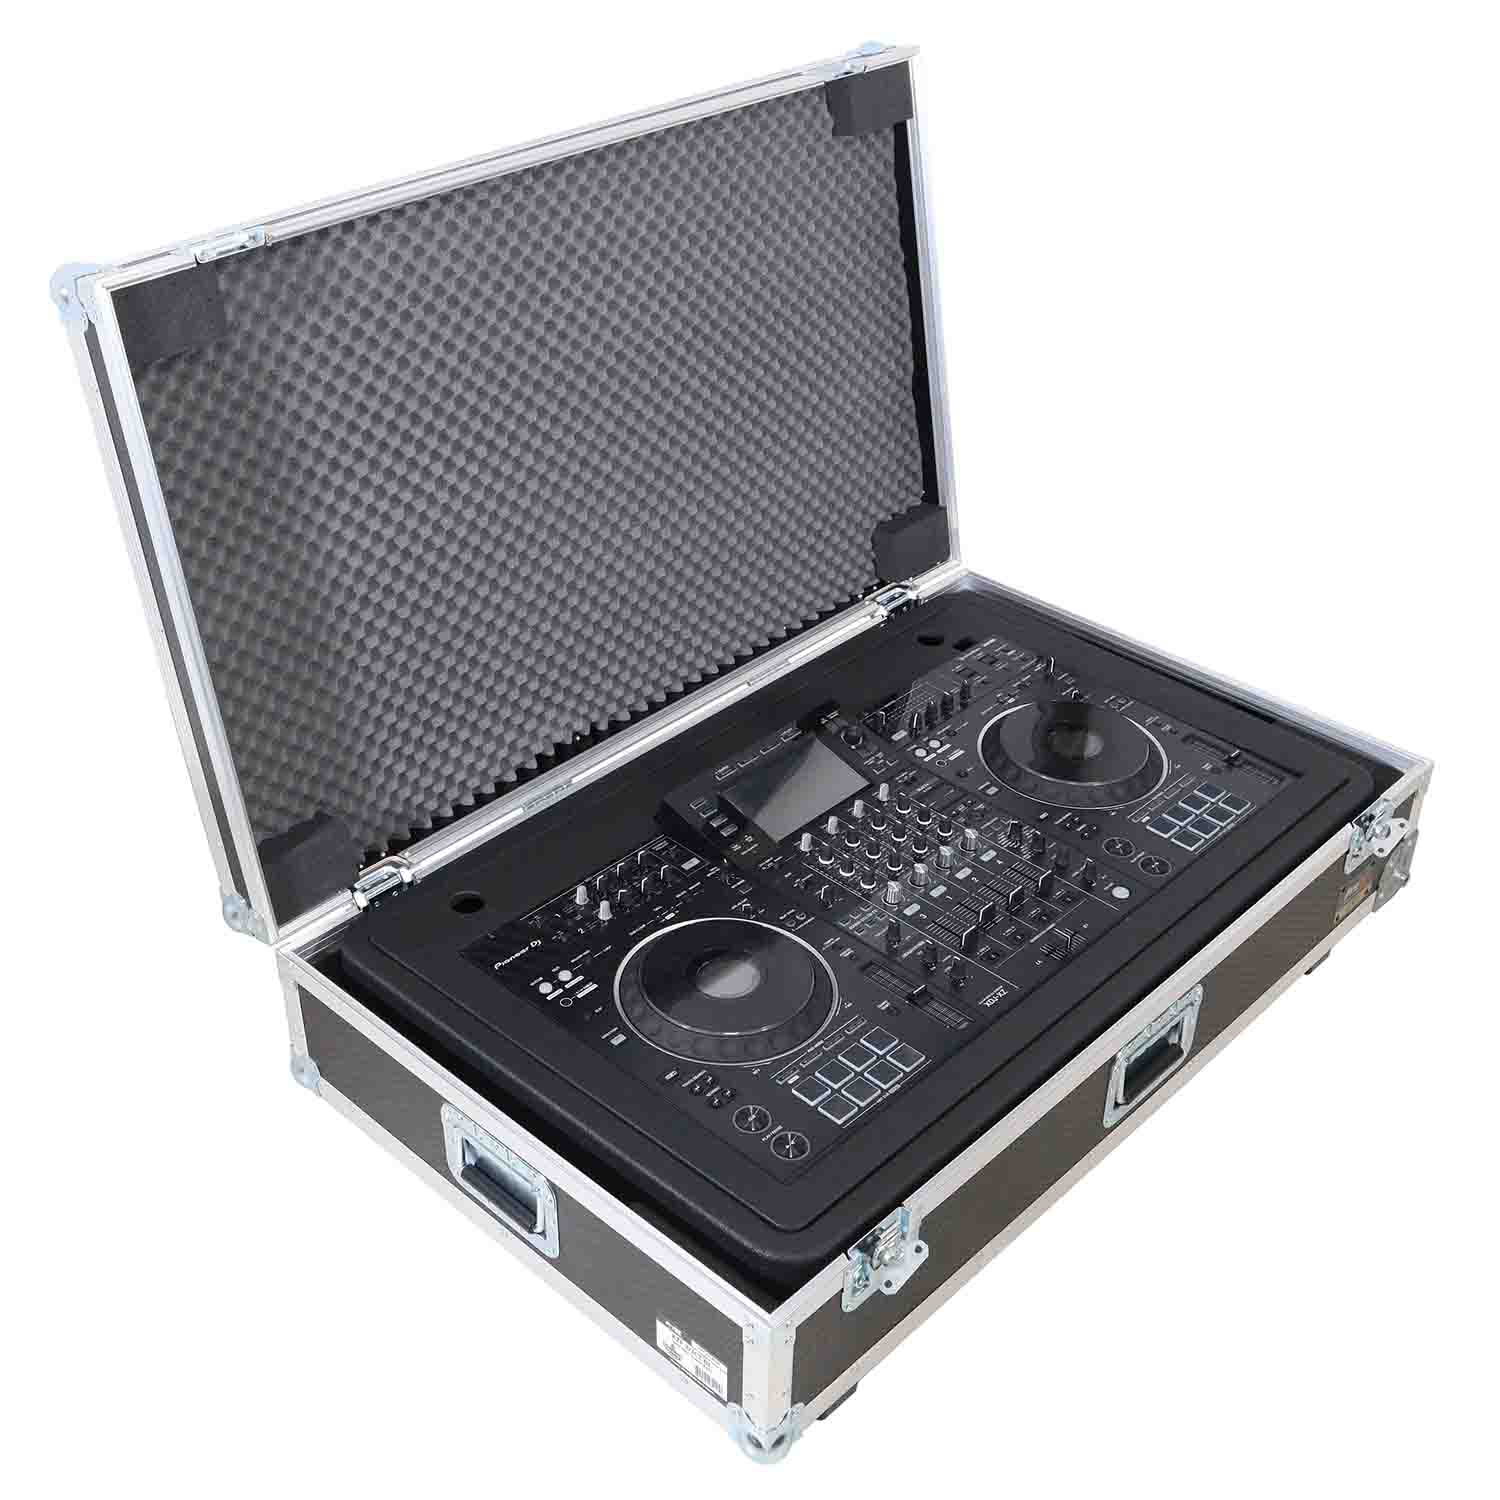 ProX XZF-DJCTBLCASE Control Tower DJ Stand with Laptop Arm, Travel Hard Cases - Black Finish - Hollywood DJ